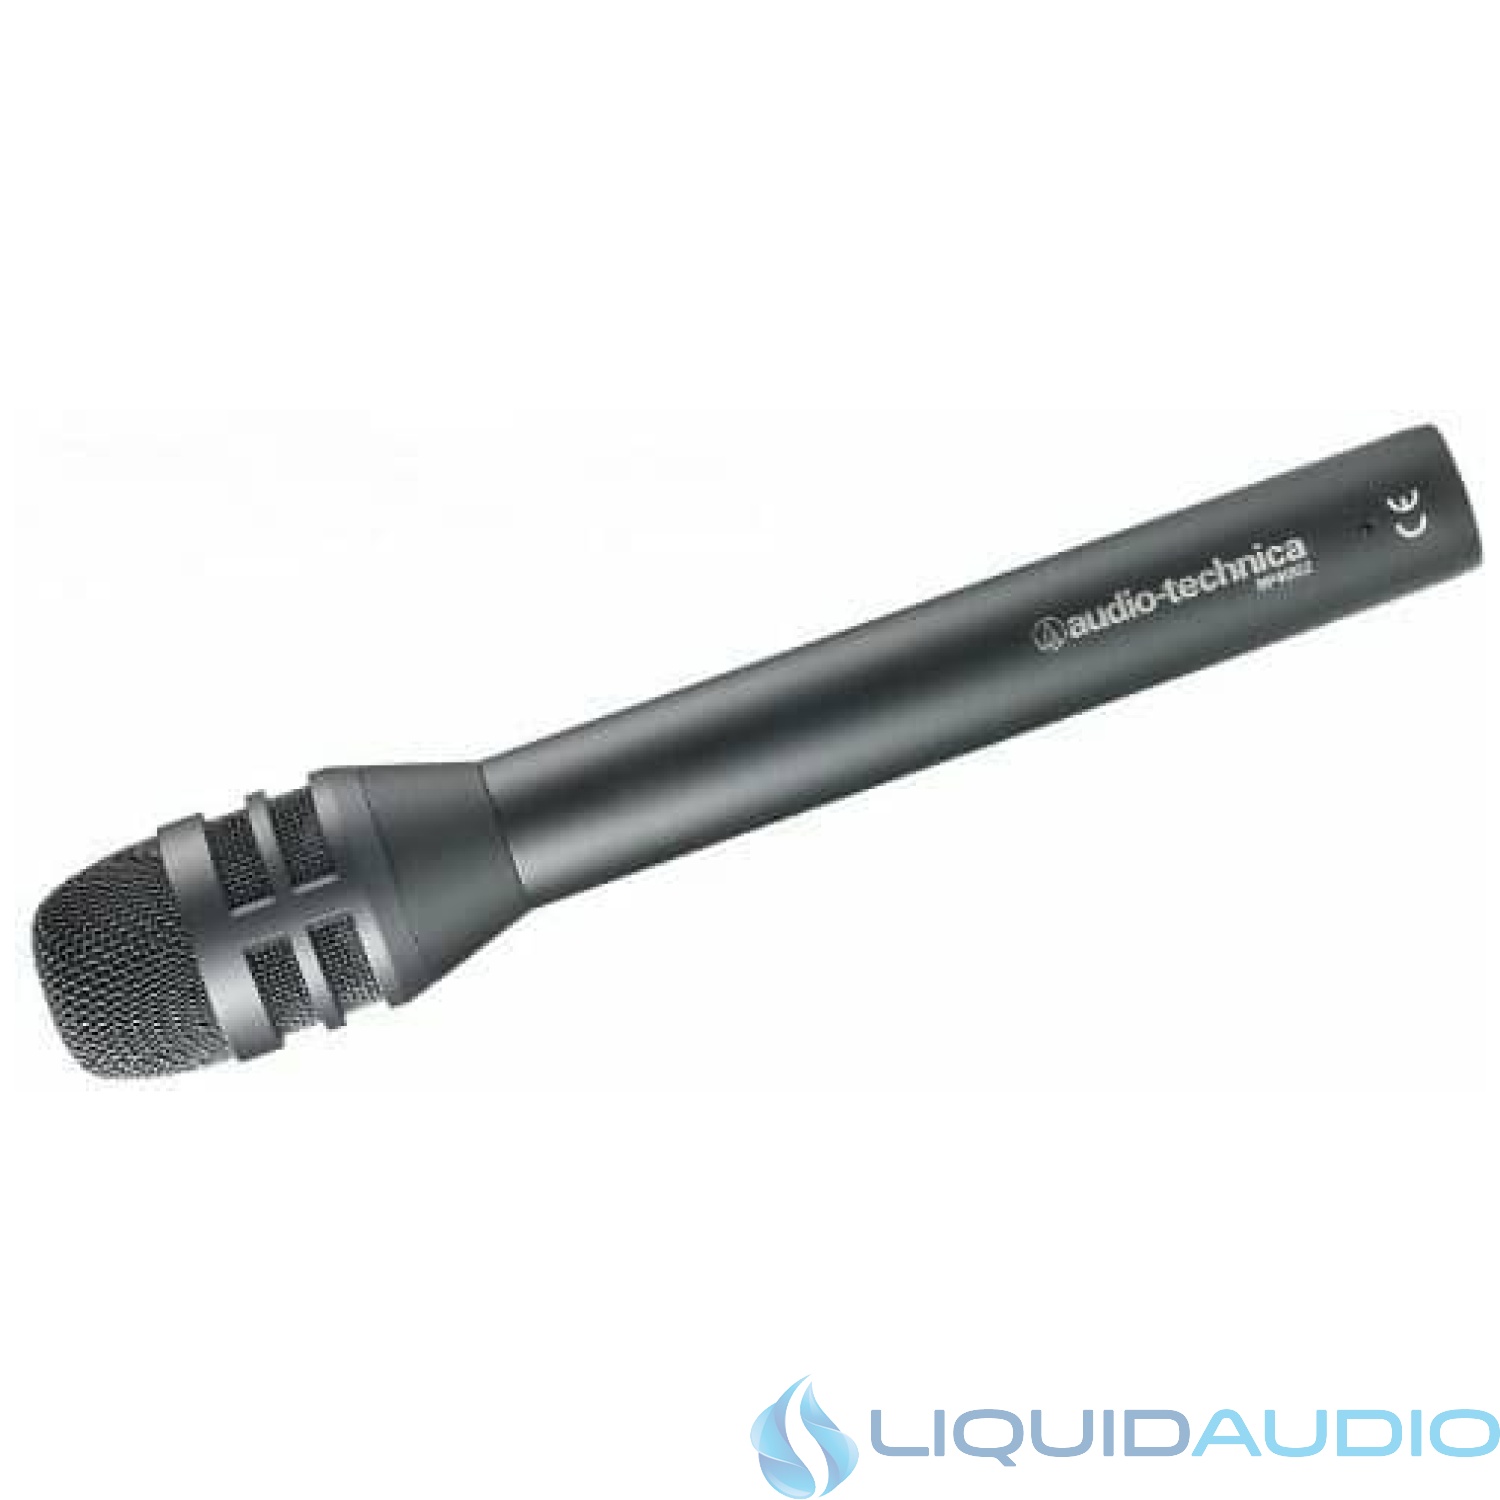 Audio-Technica BP4001 Cardioid Dynamic Handheld Microphone for Speech